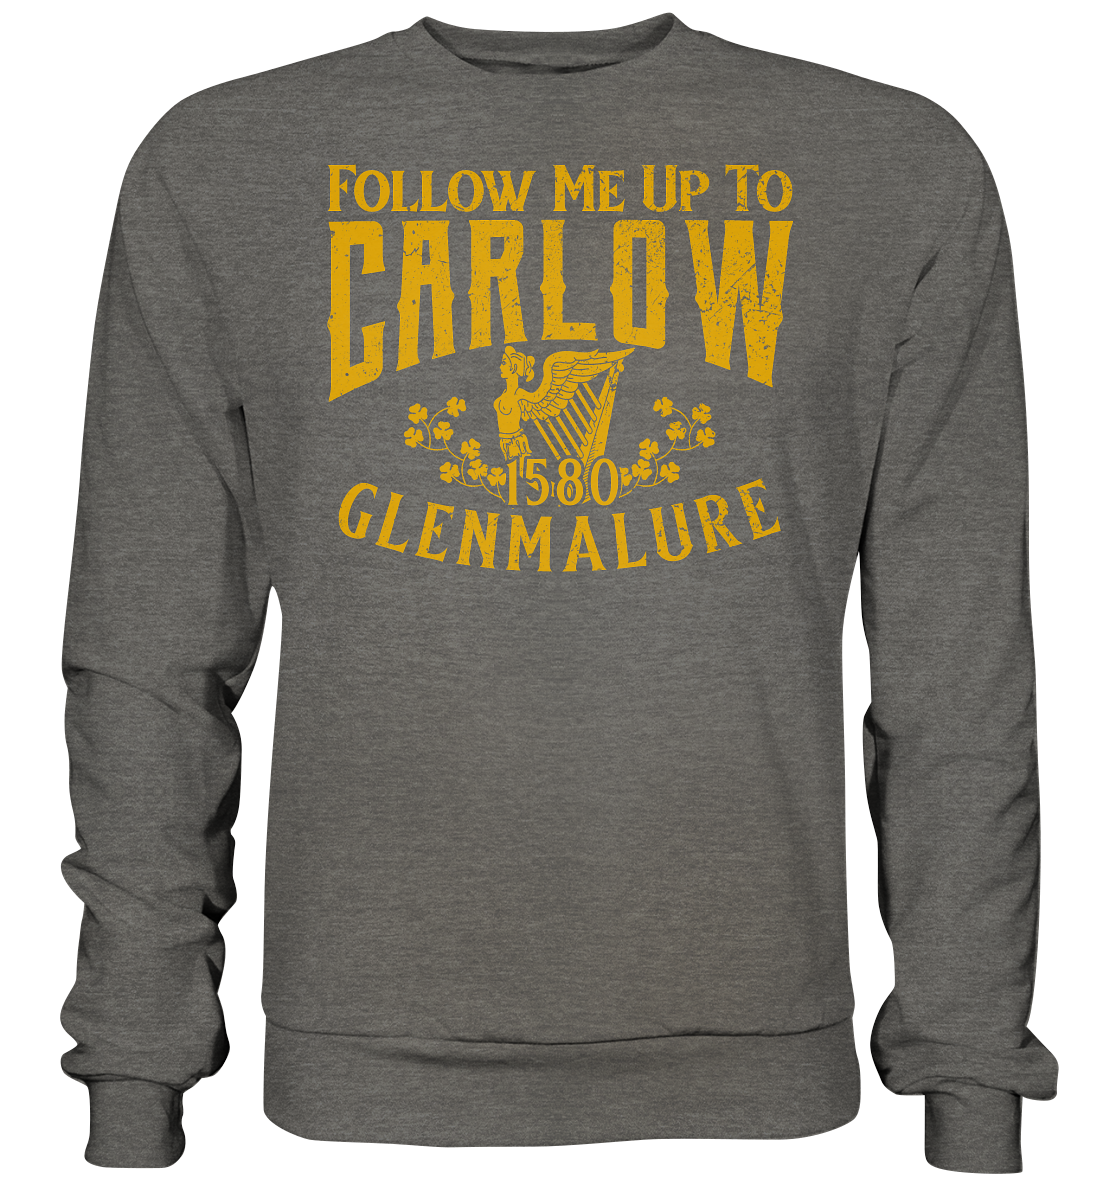 Follow Me Up To Carlow - Basic Sweatshirt